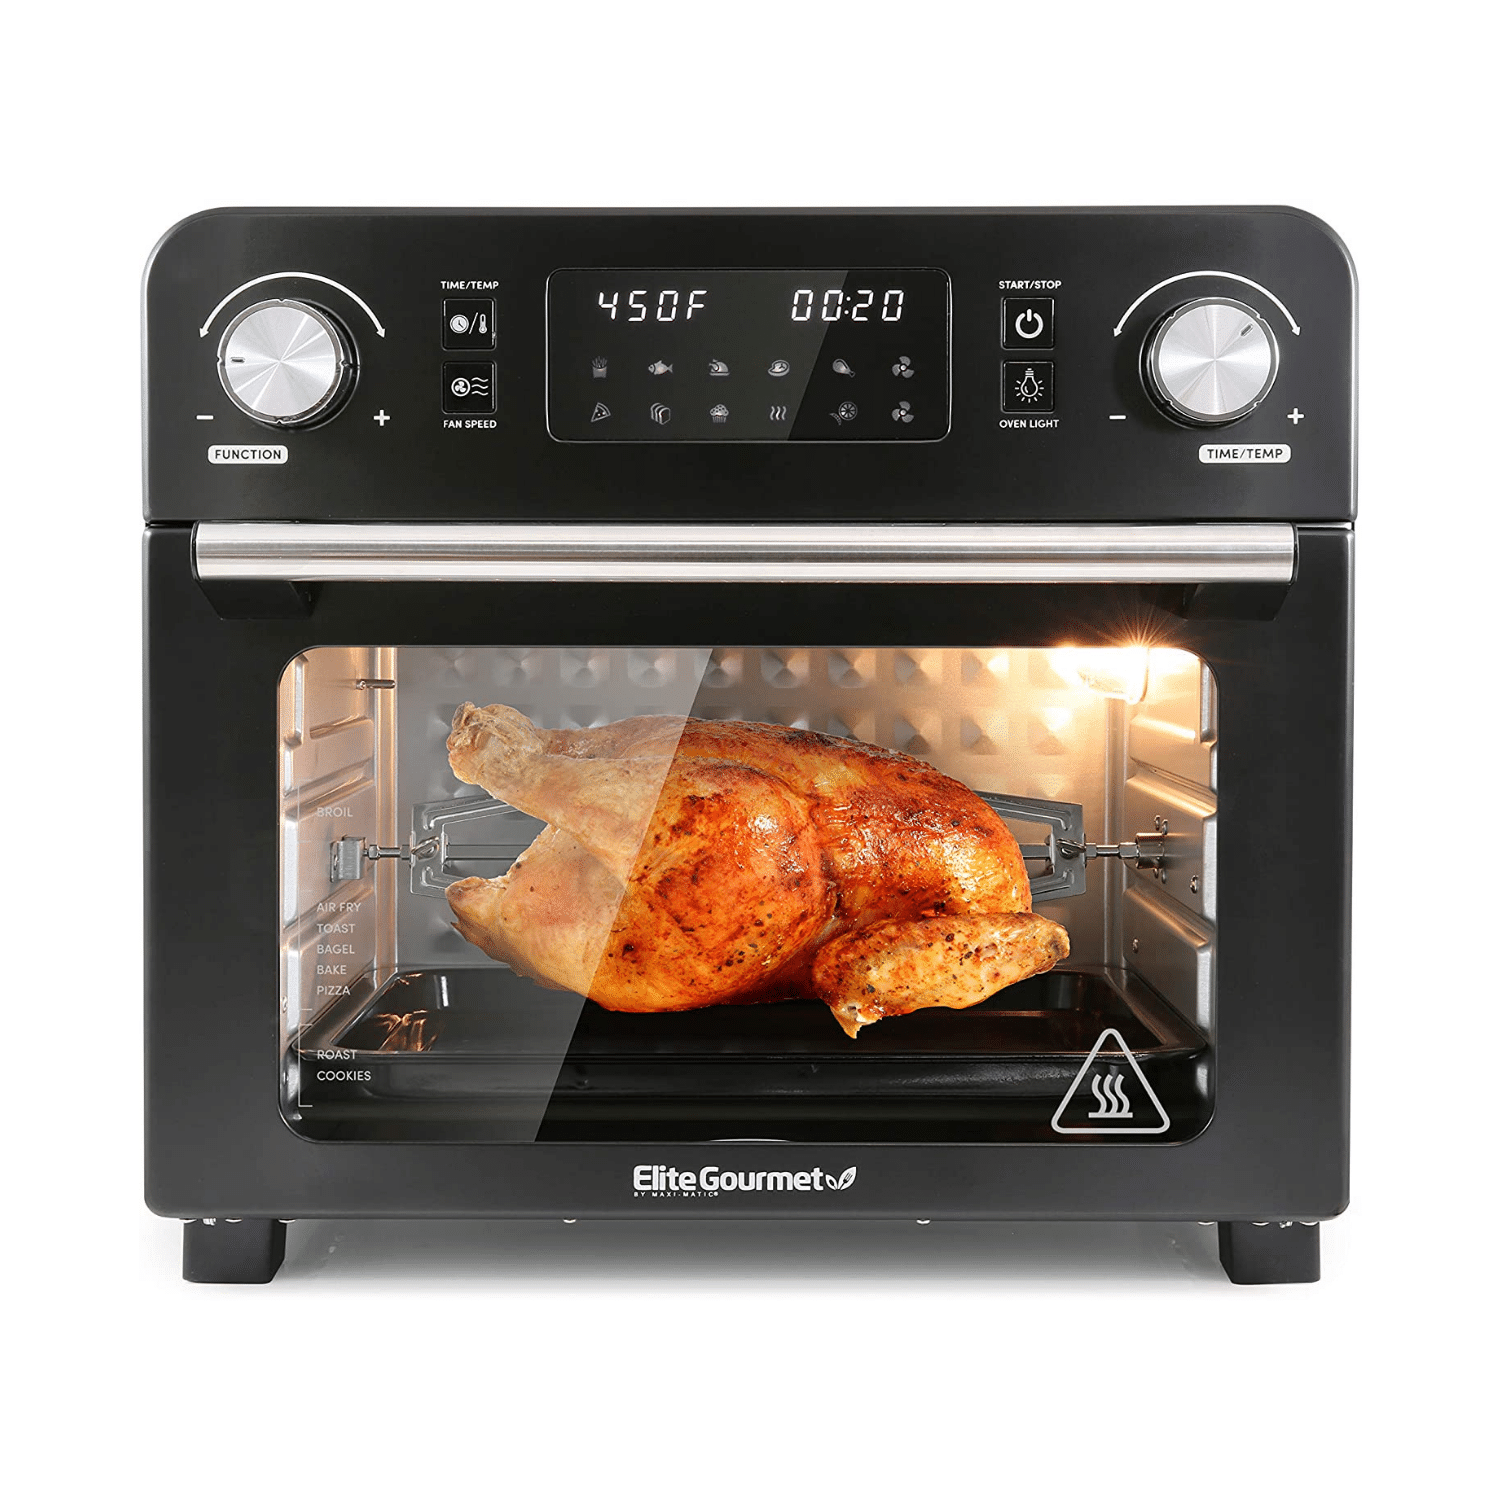 Elite Gourmet 23L Air Fryer Oven (Black)